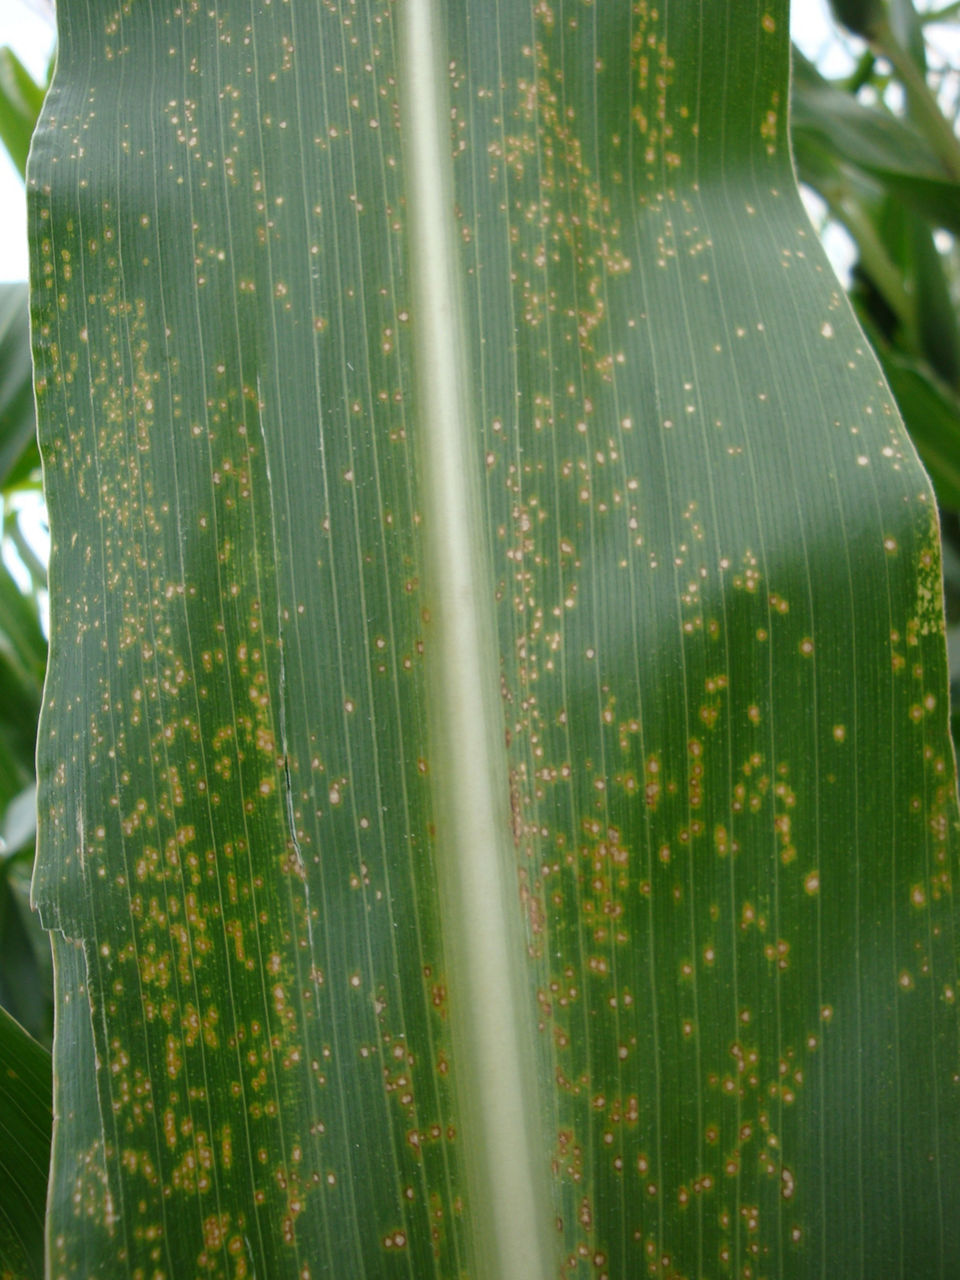 Figure 2. Eyespot lesions on a corn leaf